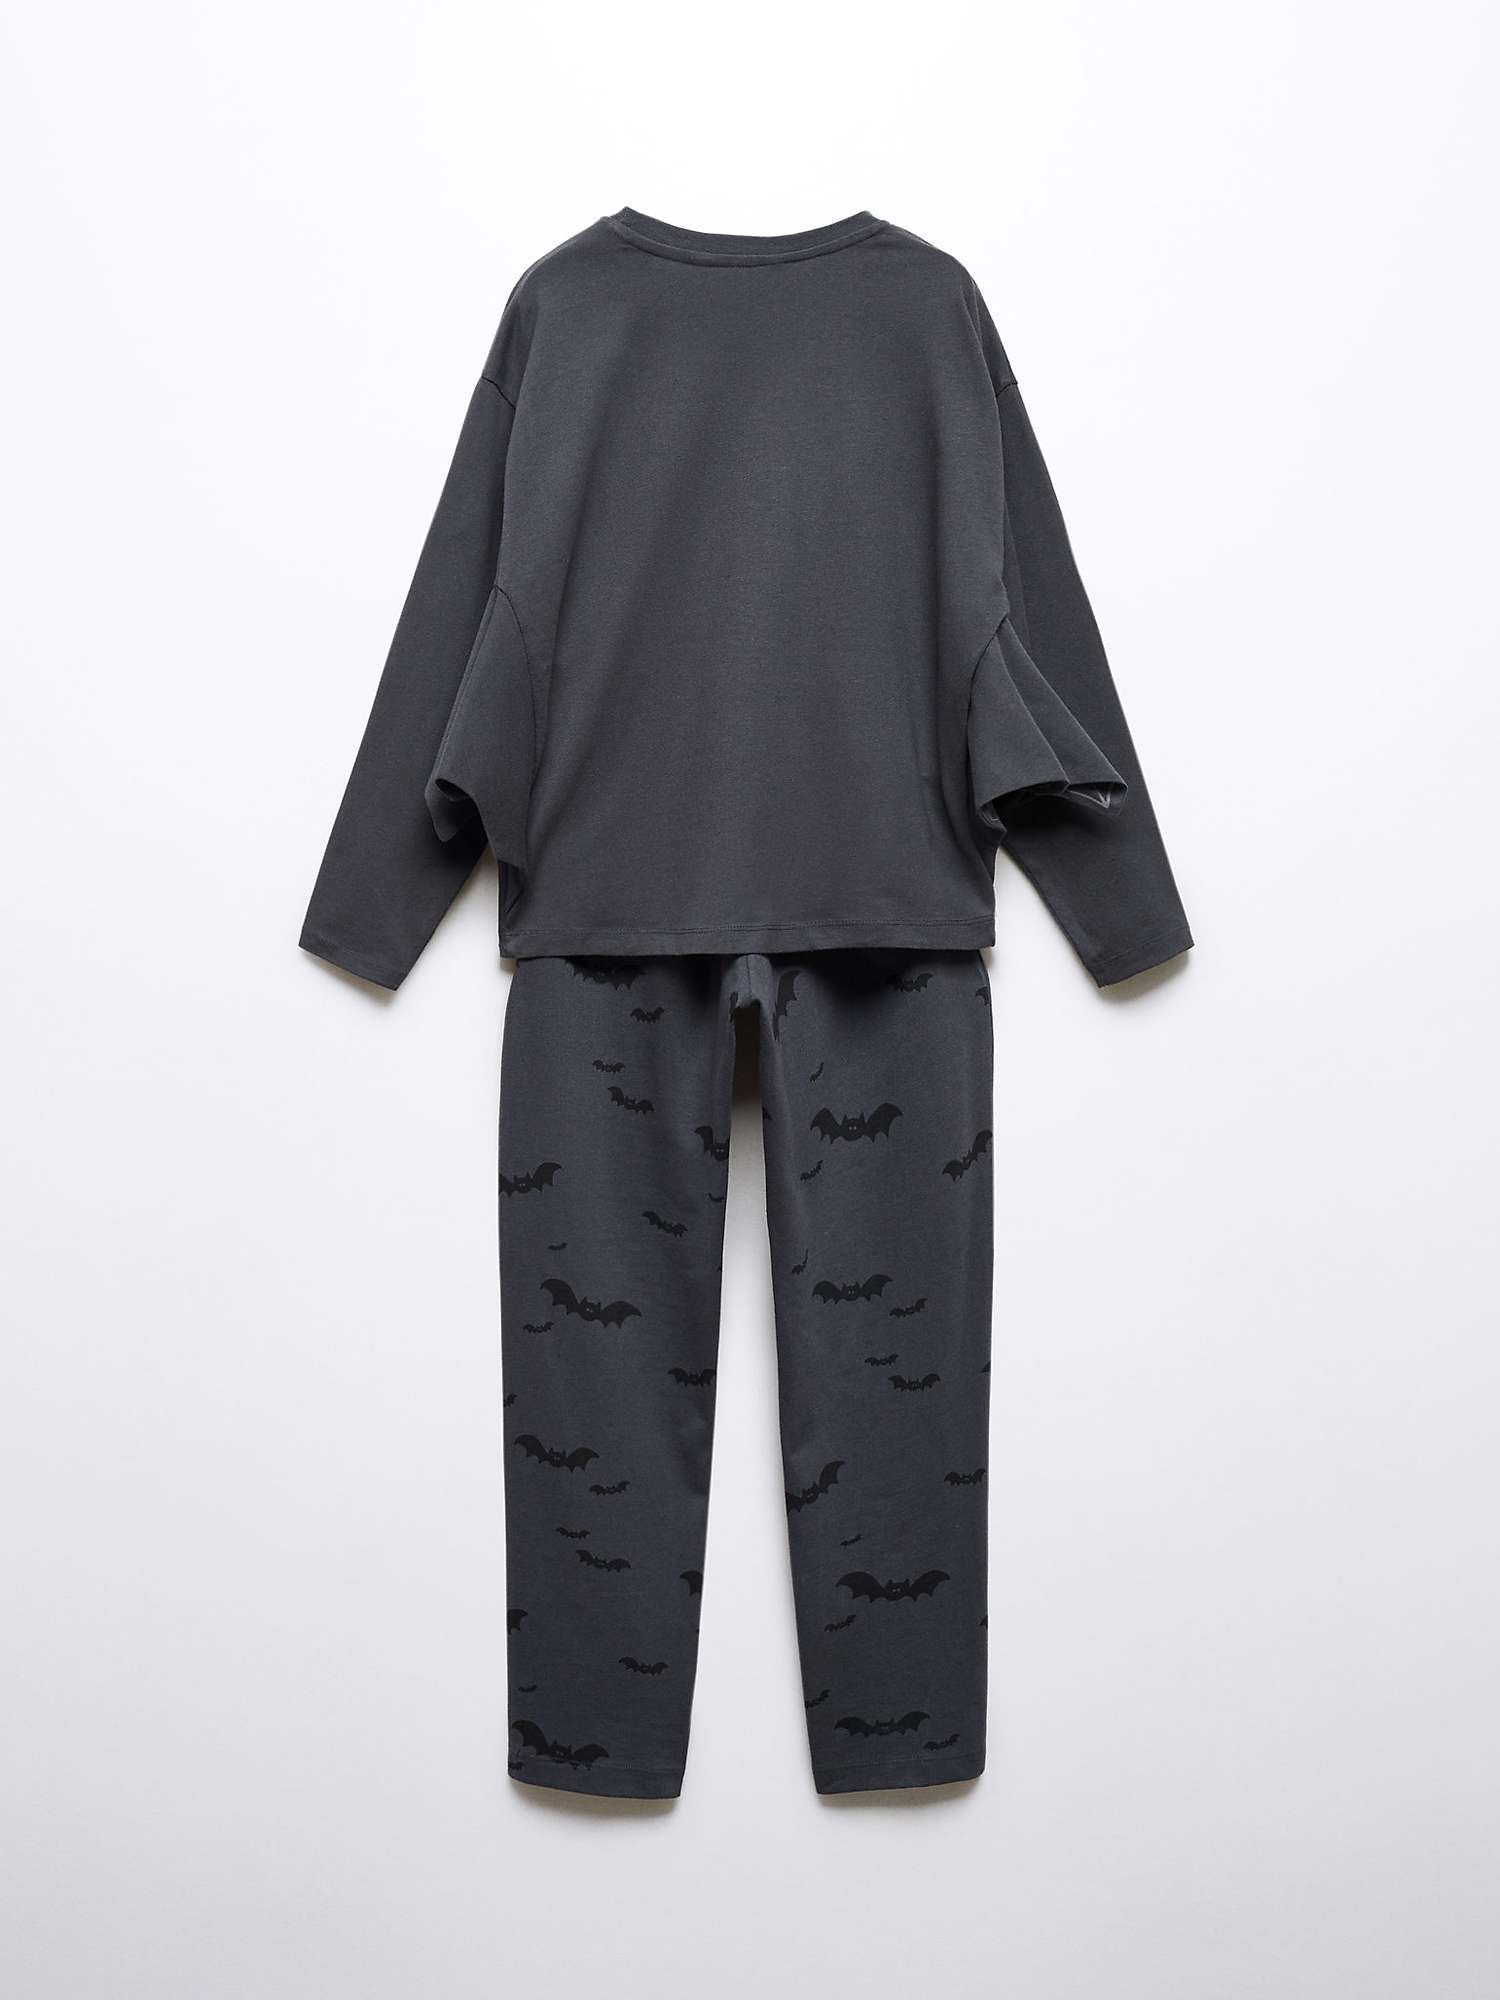 Buy Mango Kids' Bat Pyjama Top & Bottoms Set, Charcoal Online at johnlewis.com